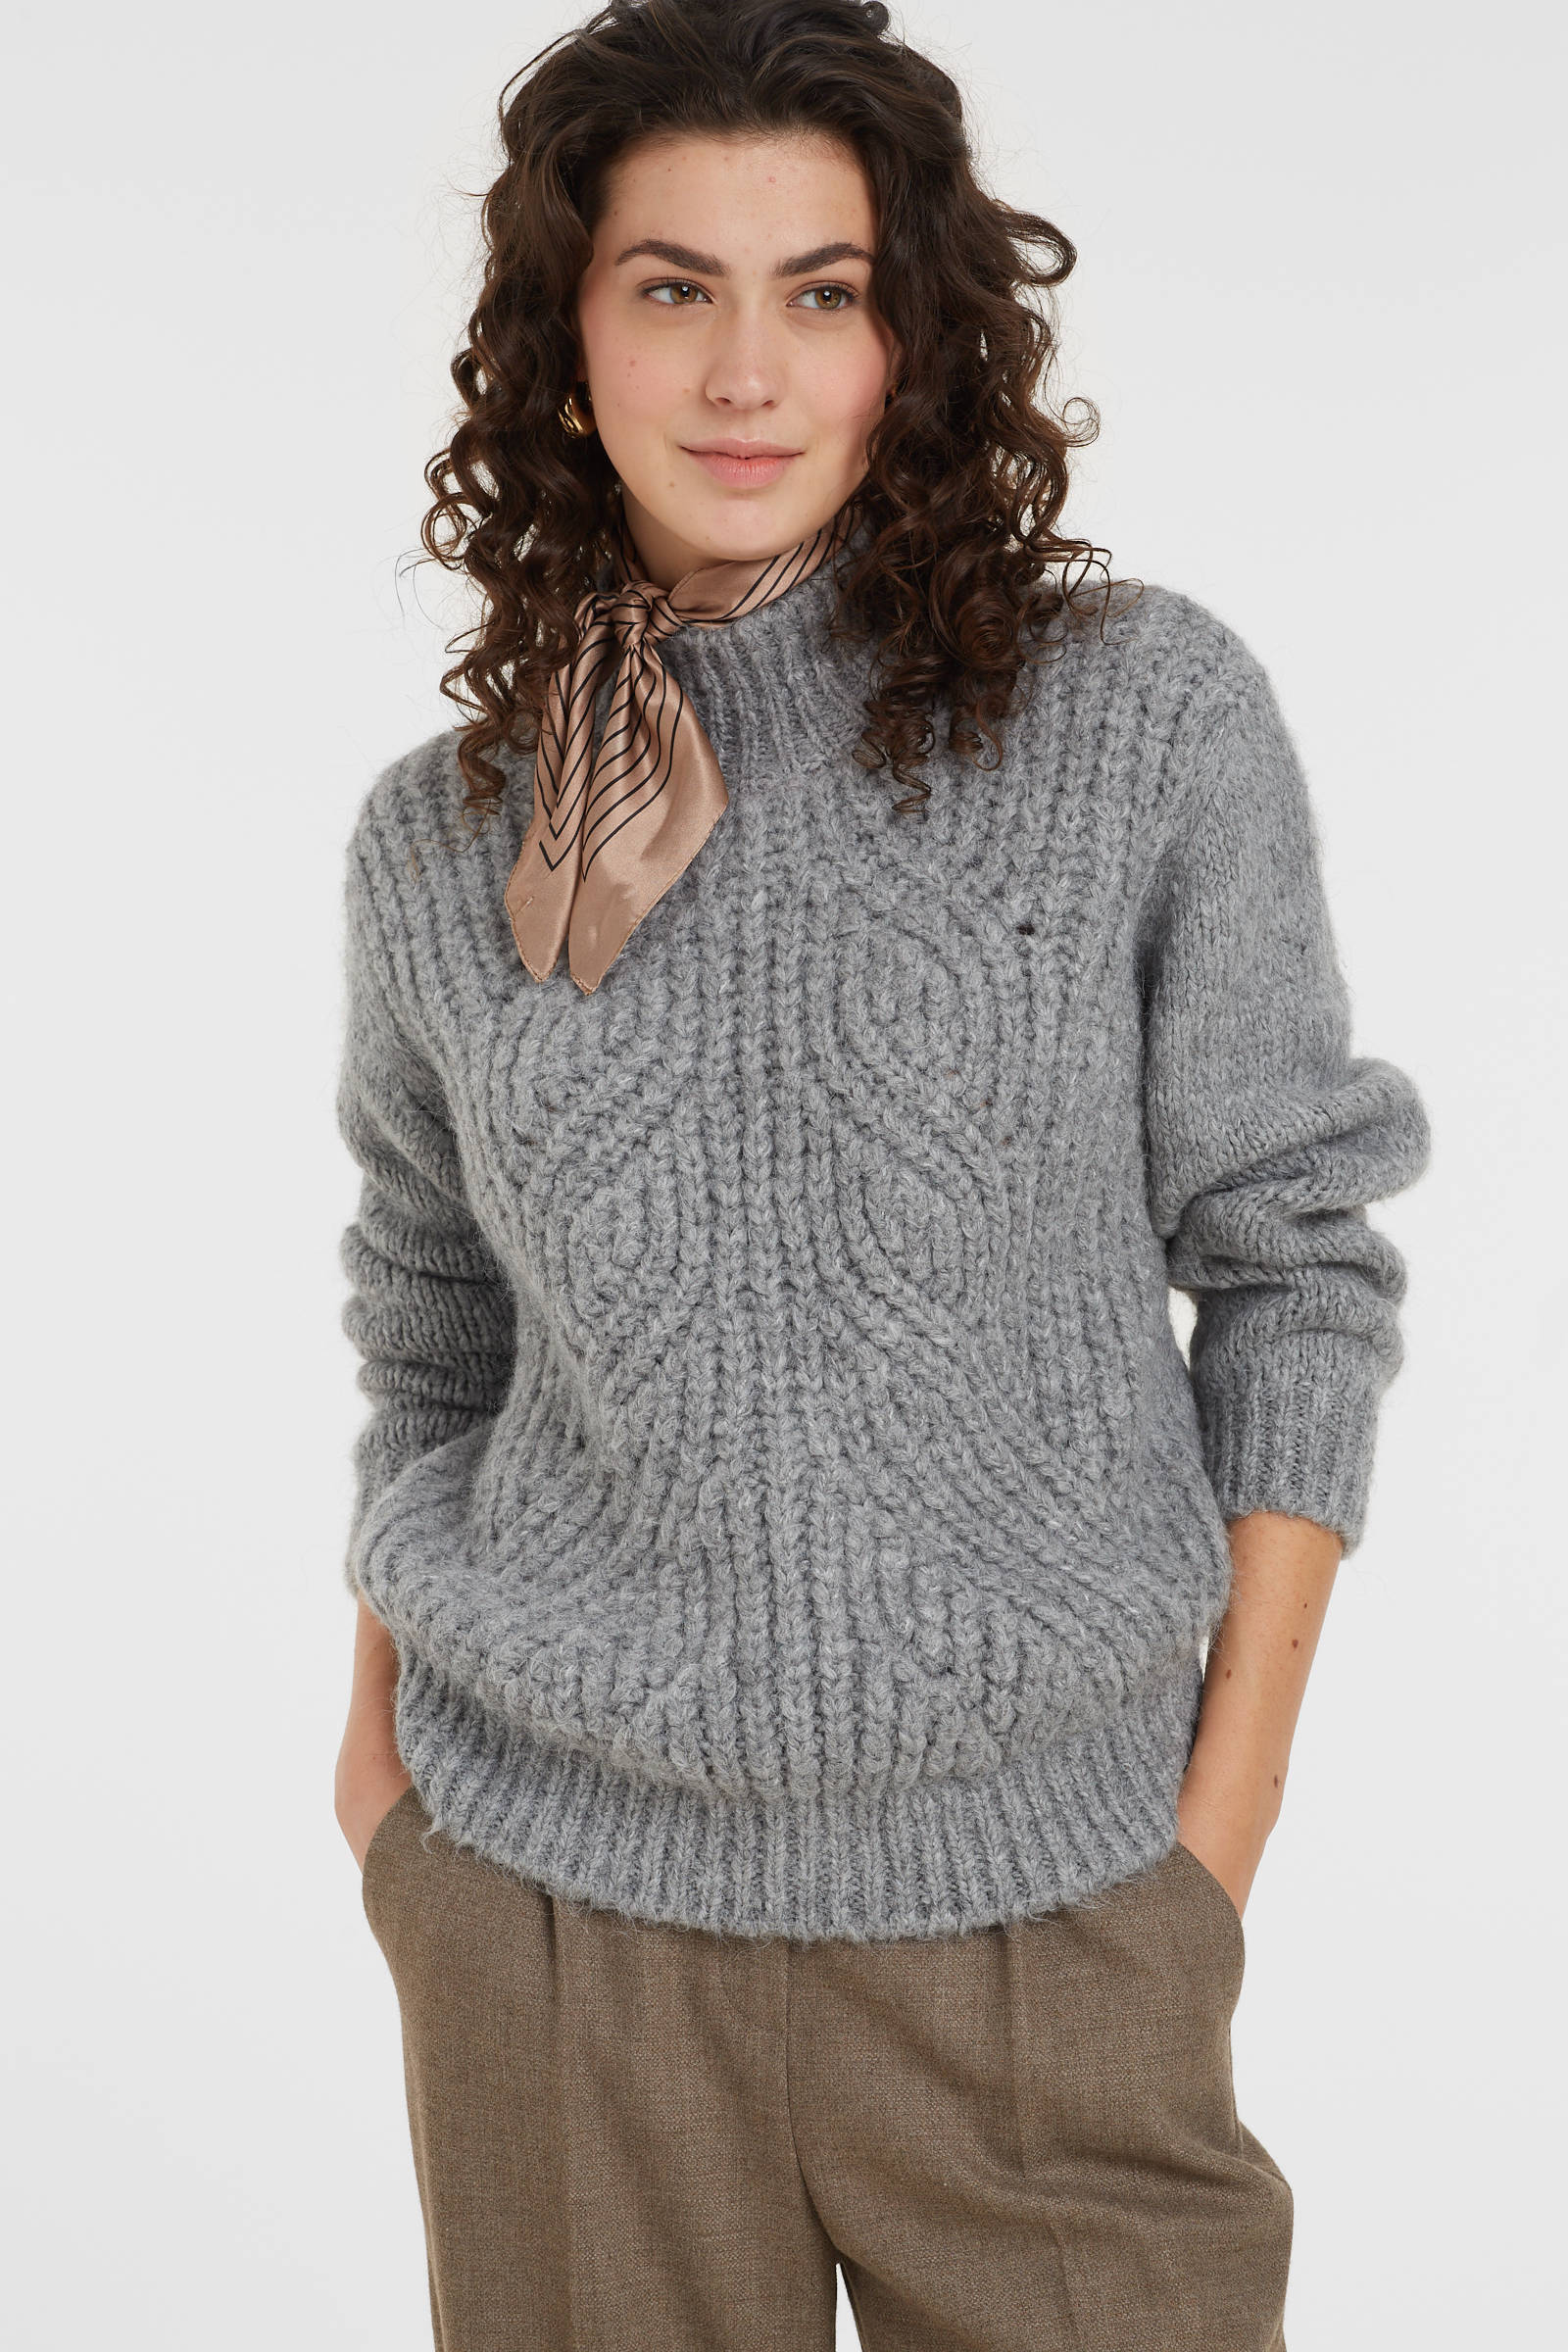 Kleding Dameskleding Sweaters Pullovers gebreide zwarte grijze tweed pullover 